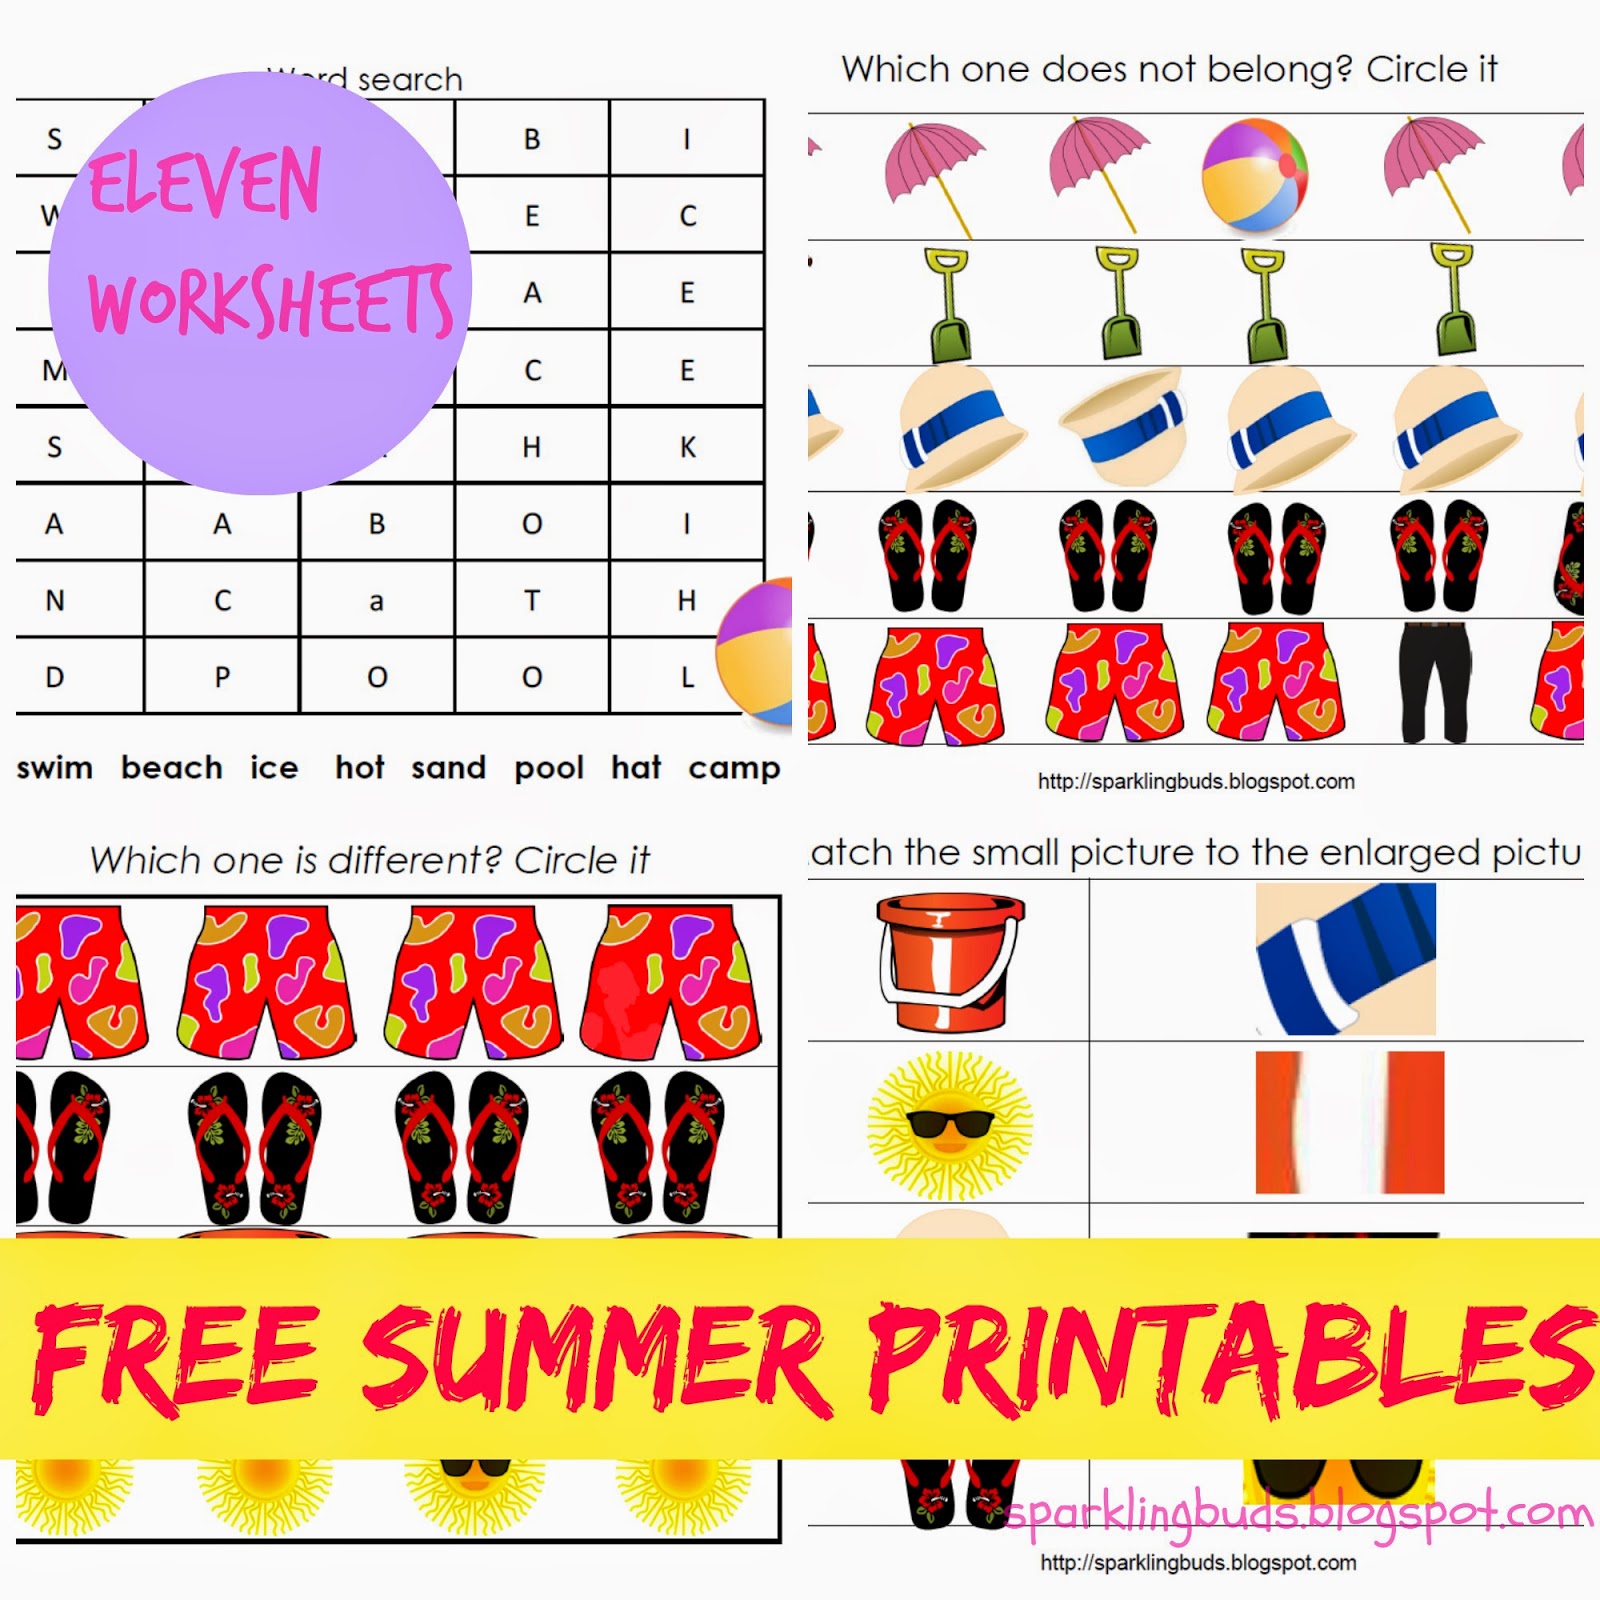 Free Summer printables - sparklingbuds